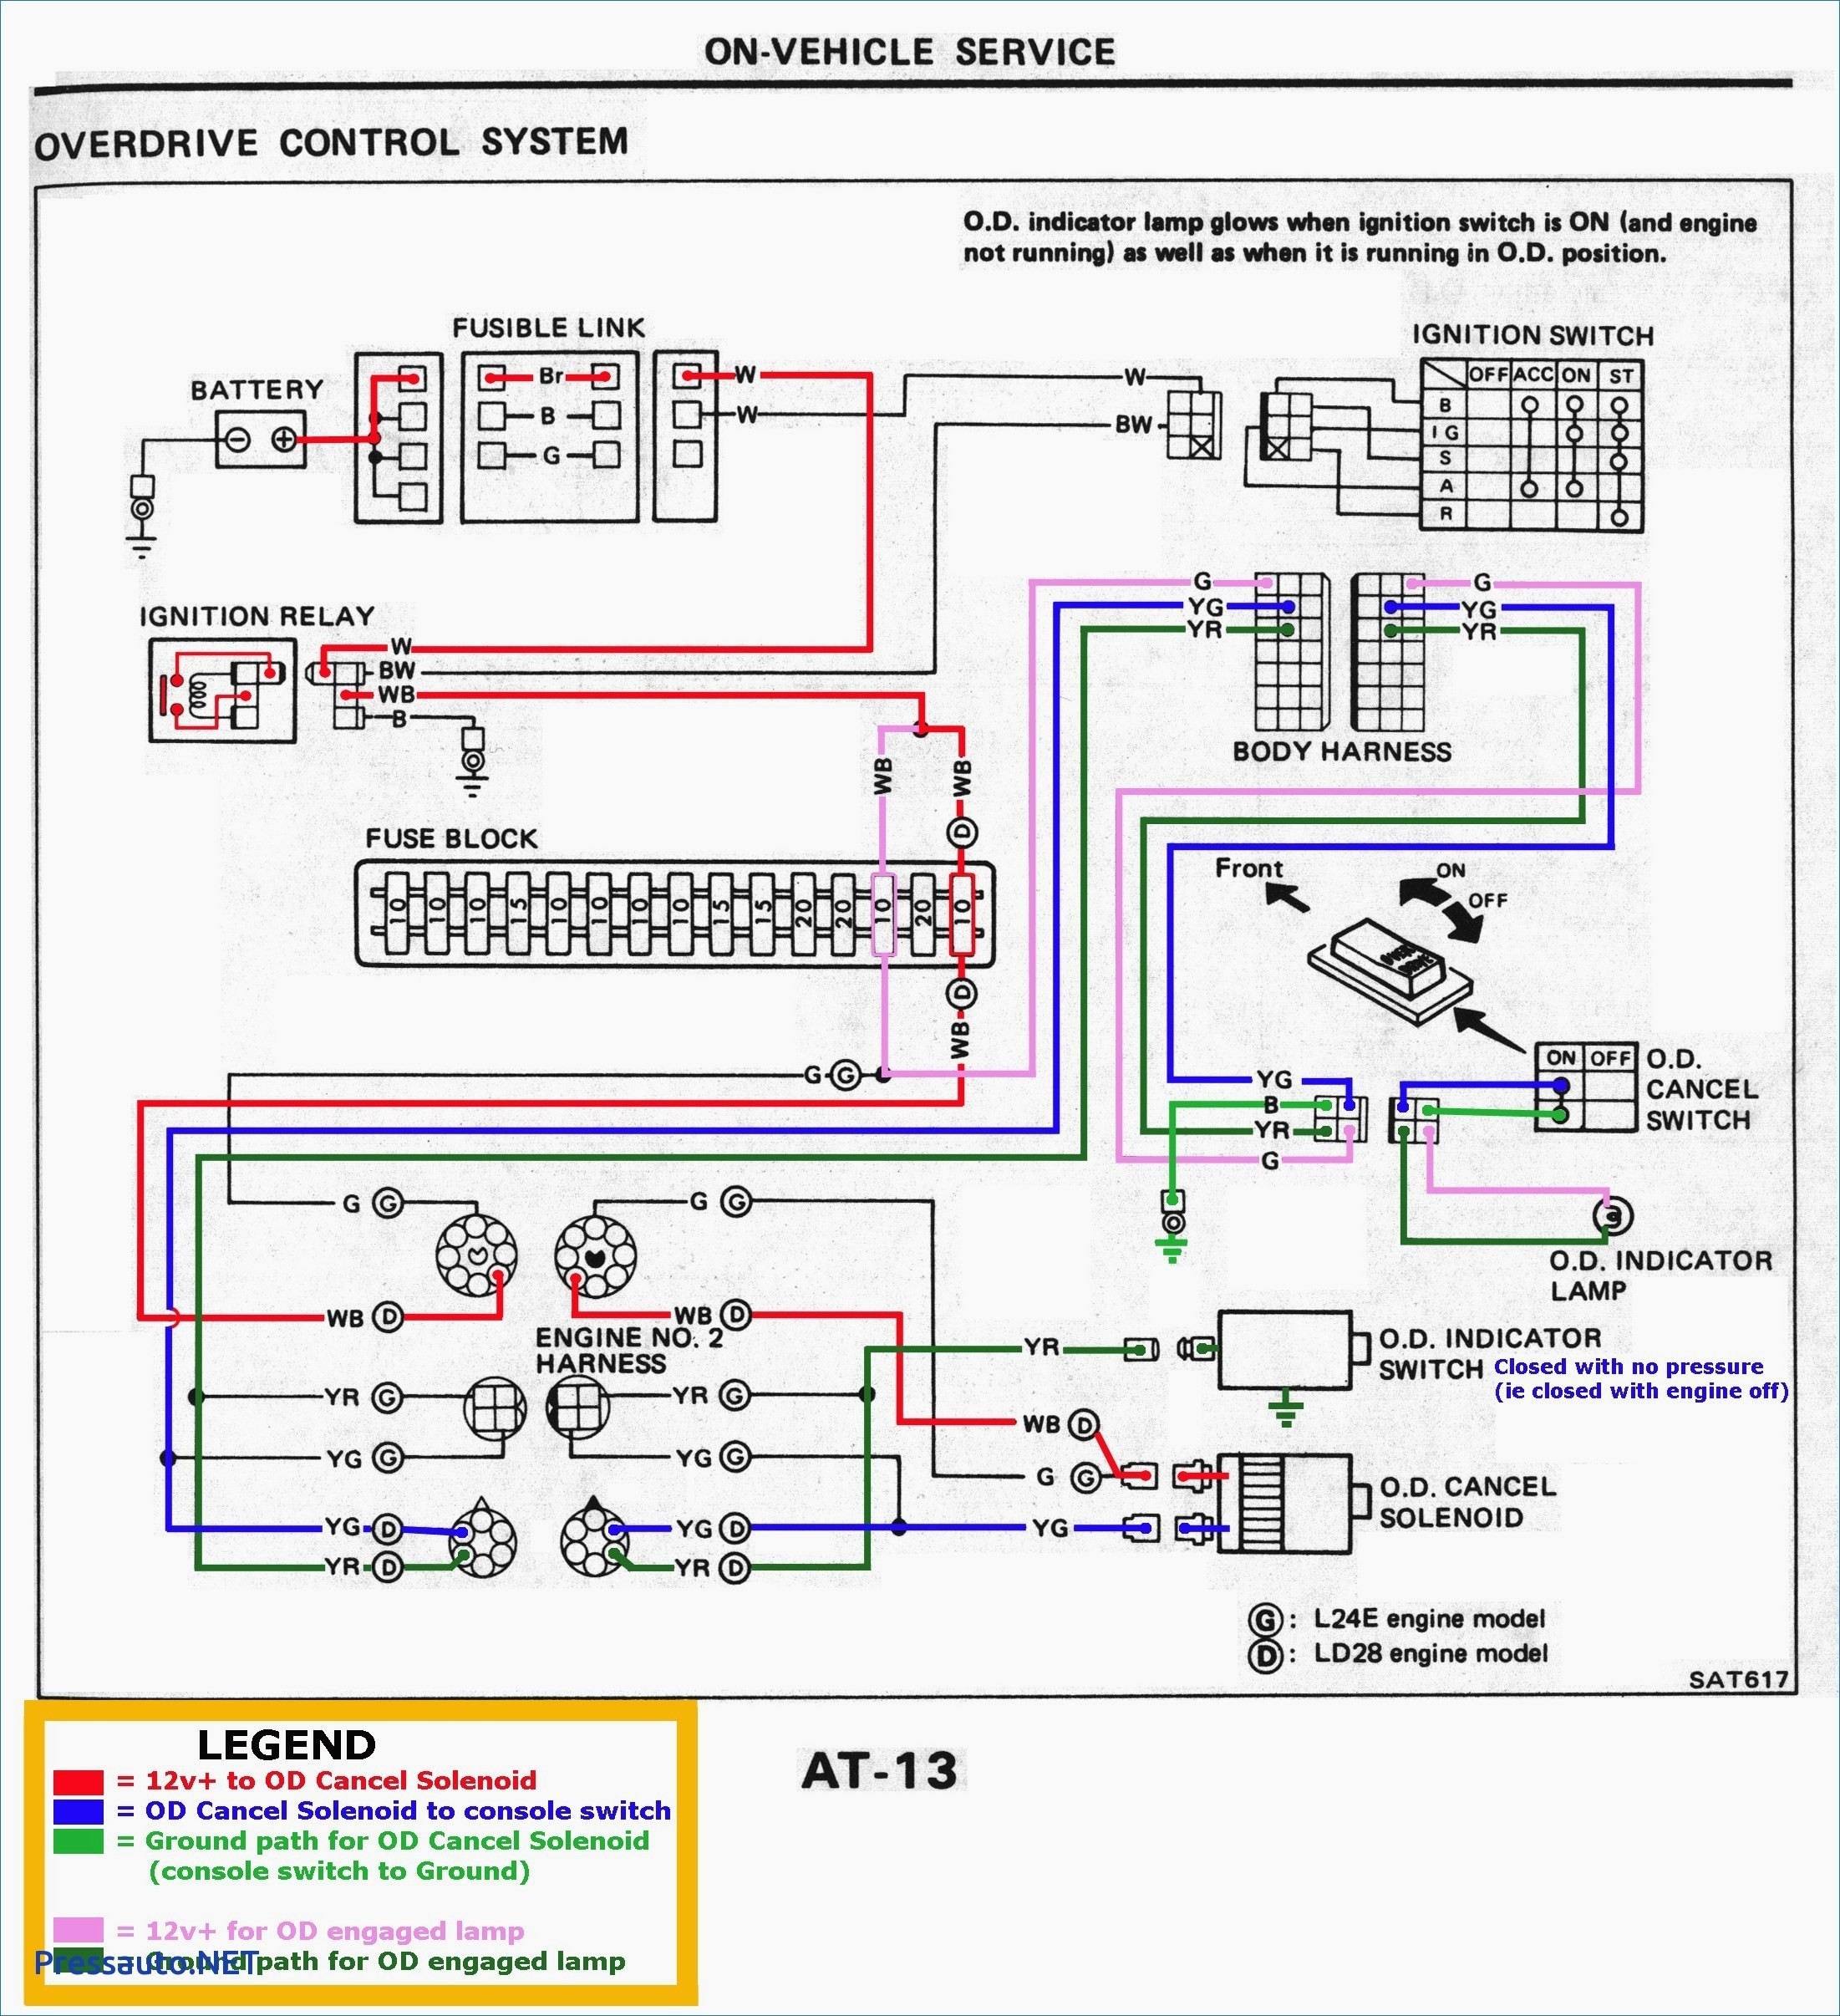 Toyota Wiring Harness Diagram toyota Wiring Diagram Symbols Fresh toyota Wiring Harness Diagram